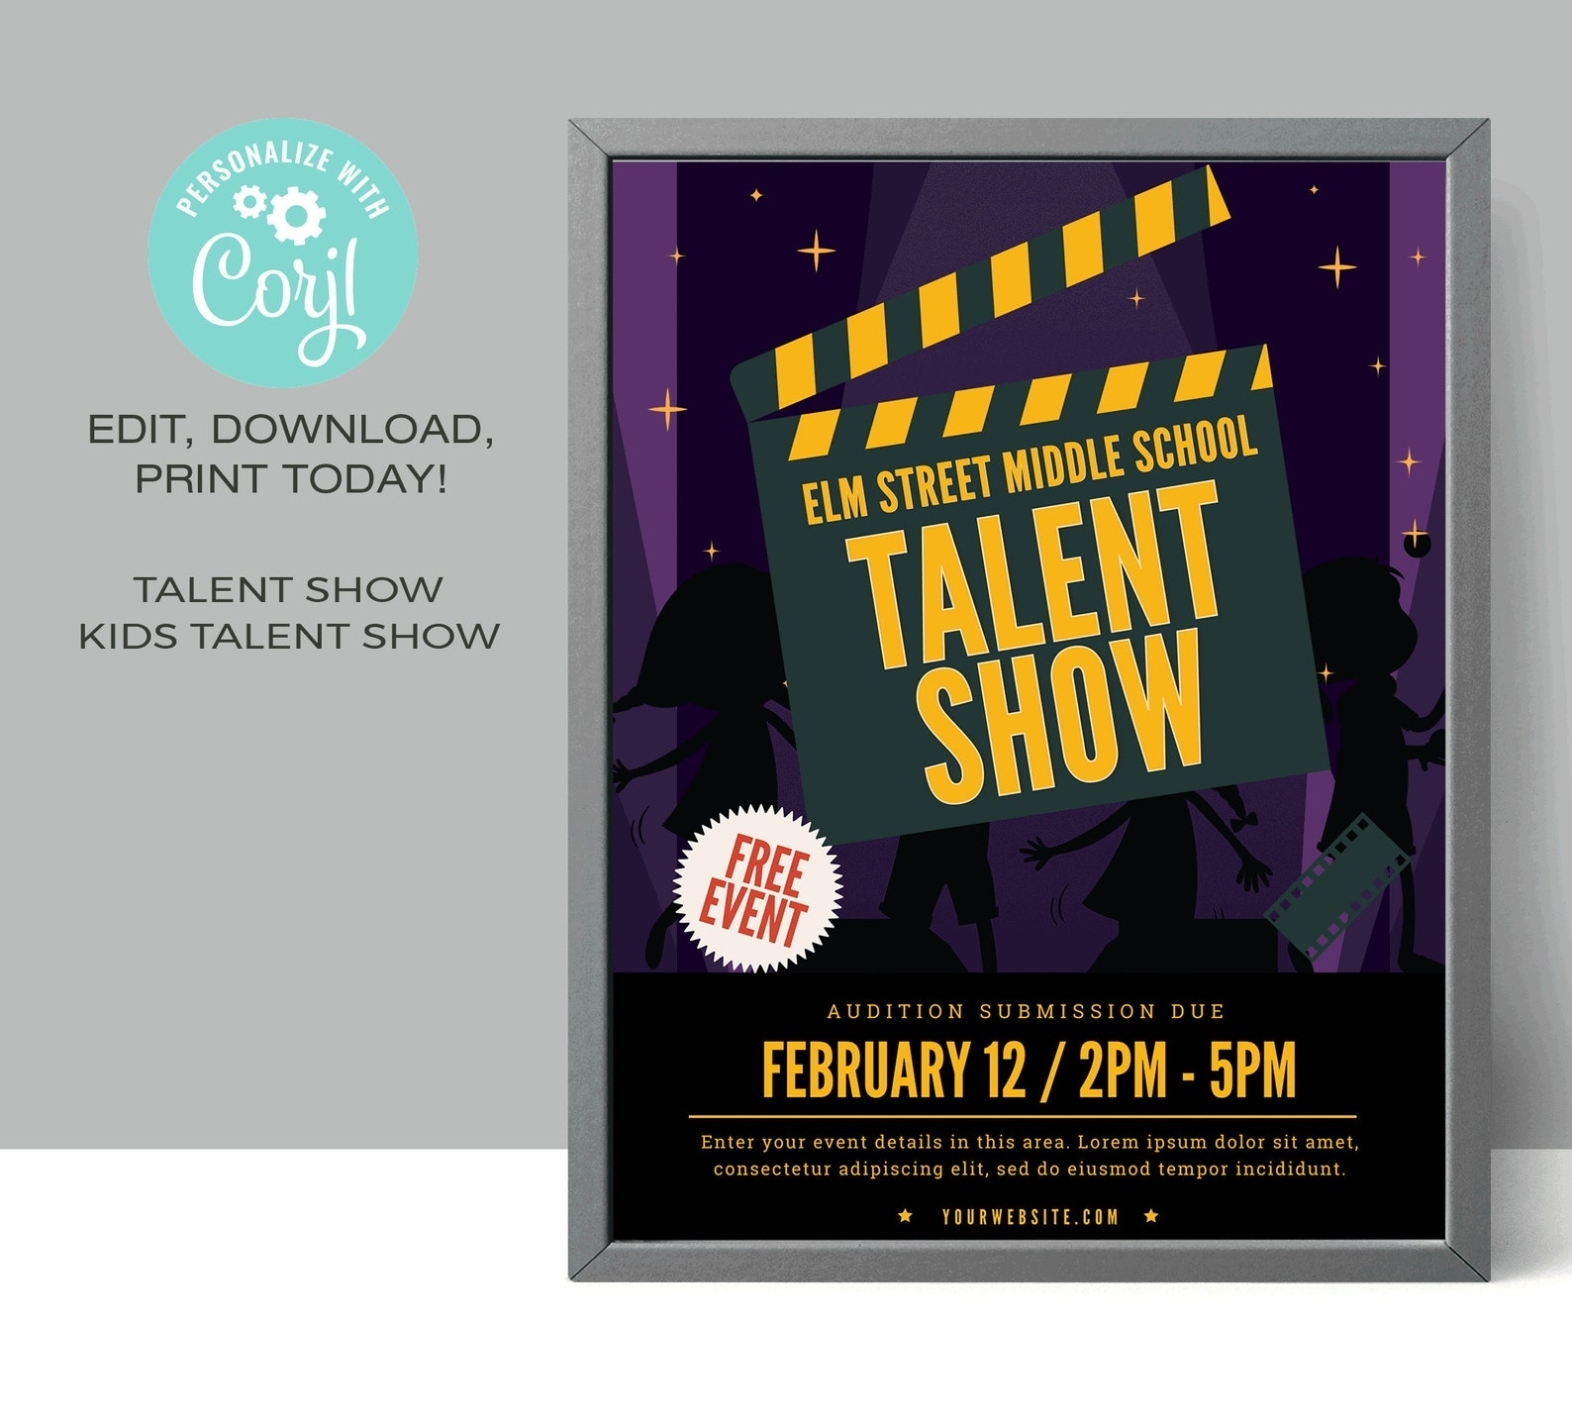 Talent Show Kids Flyer Template School Talent Show | Etsy With Talent Show Flyer Template